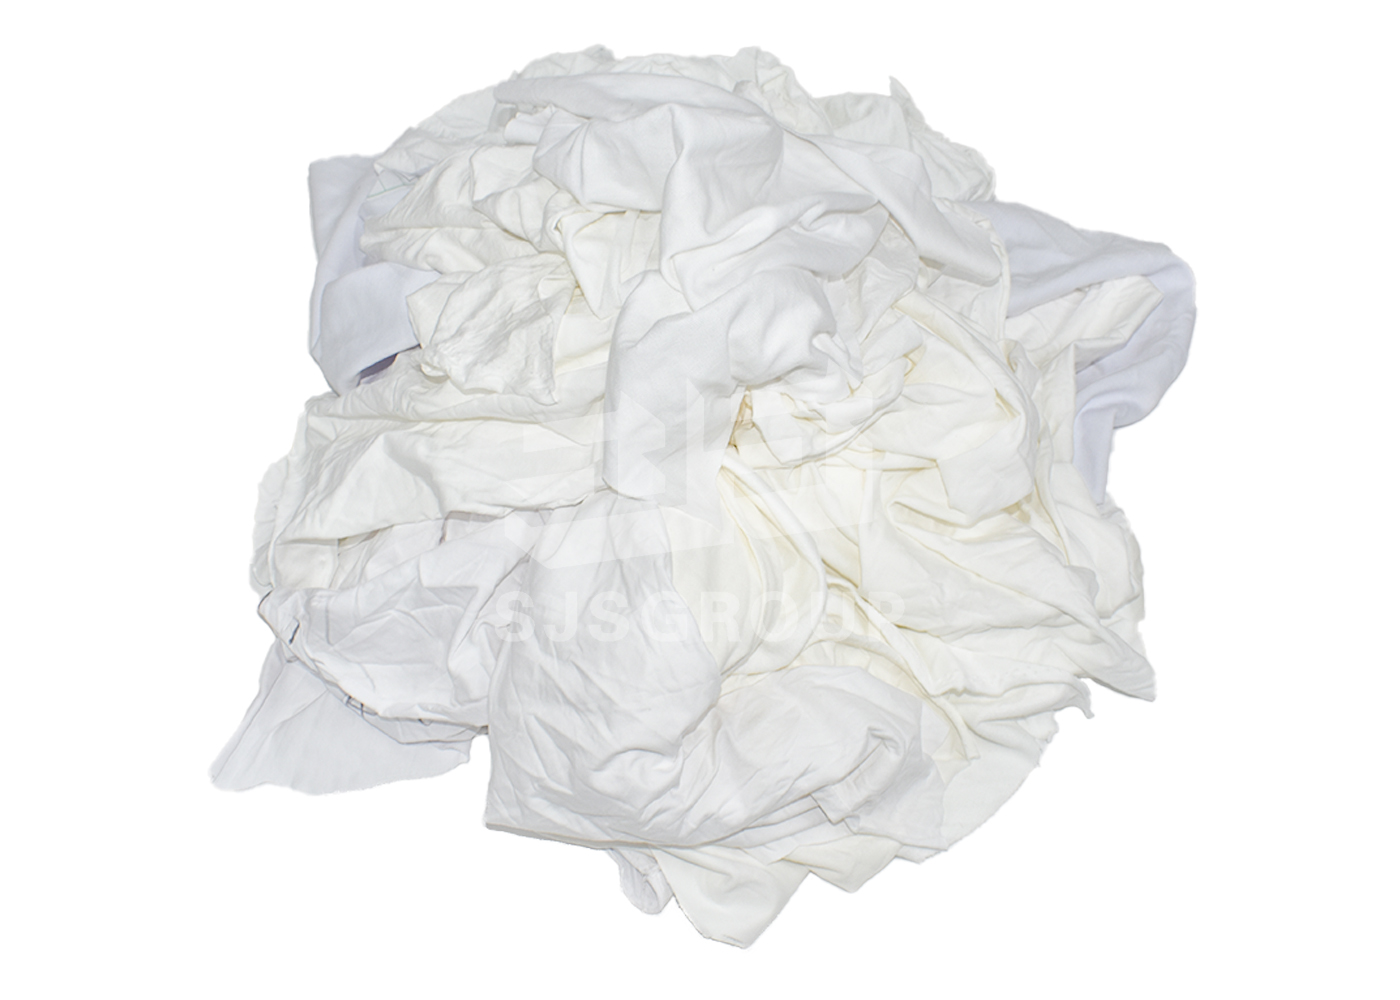 New White Cotton Rags-White cotton rags new